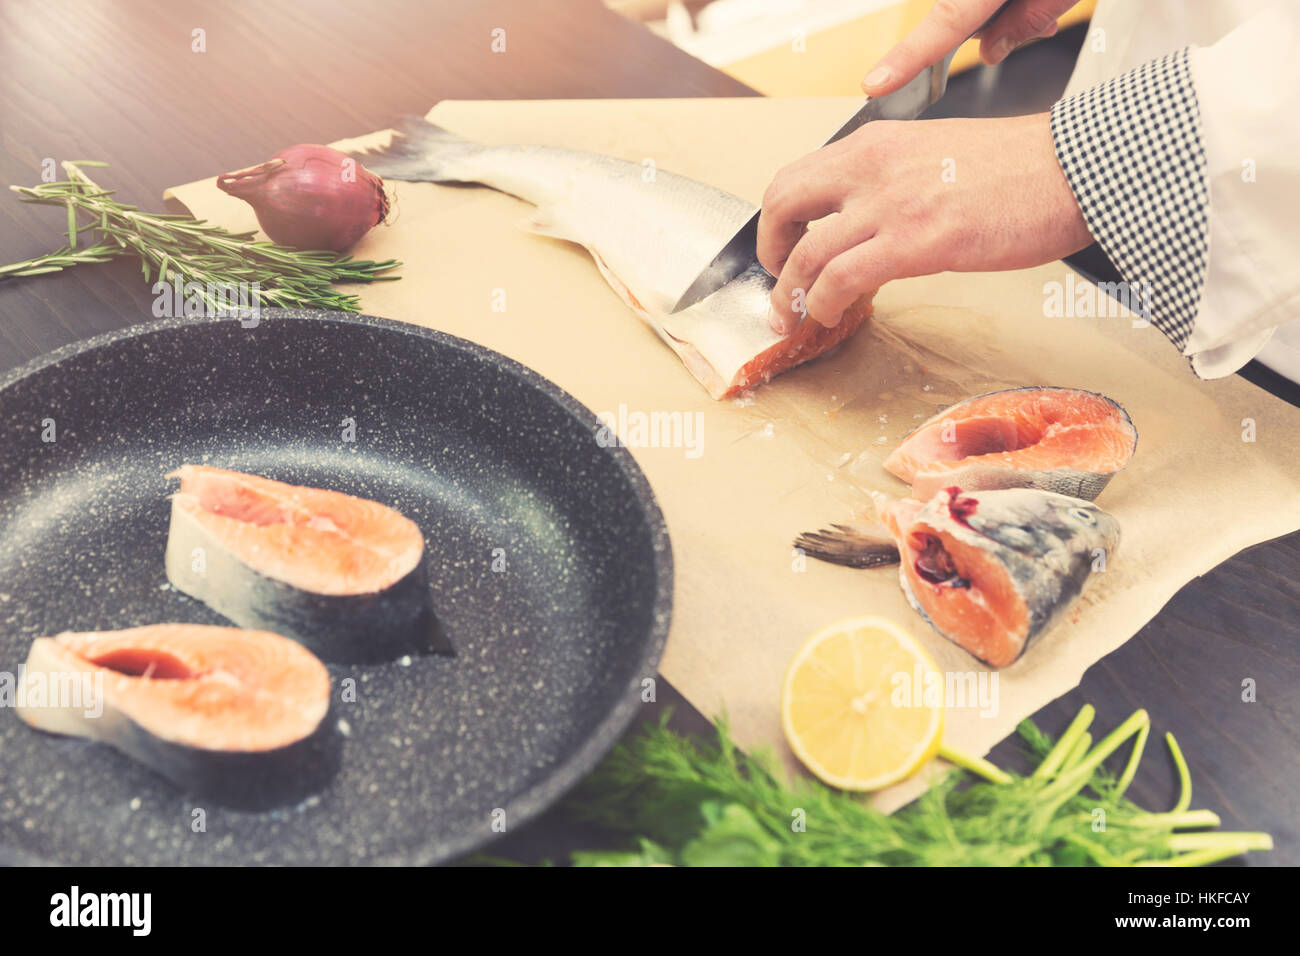 seafood - chef slicing salmon fish for preparing Stock Photo